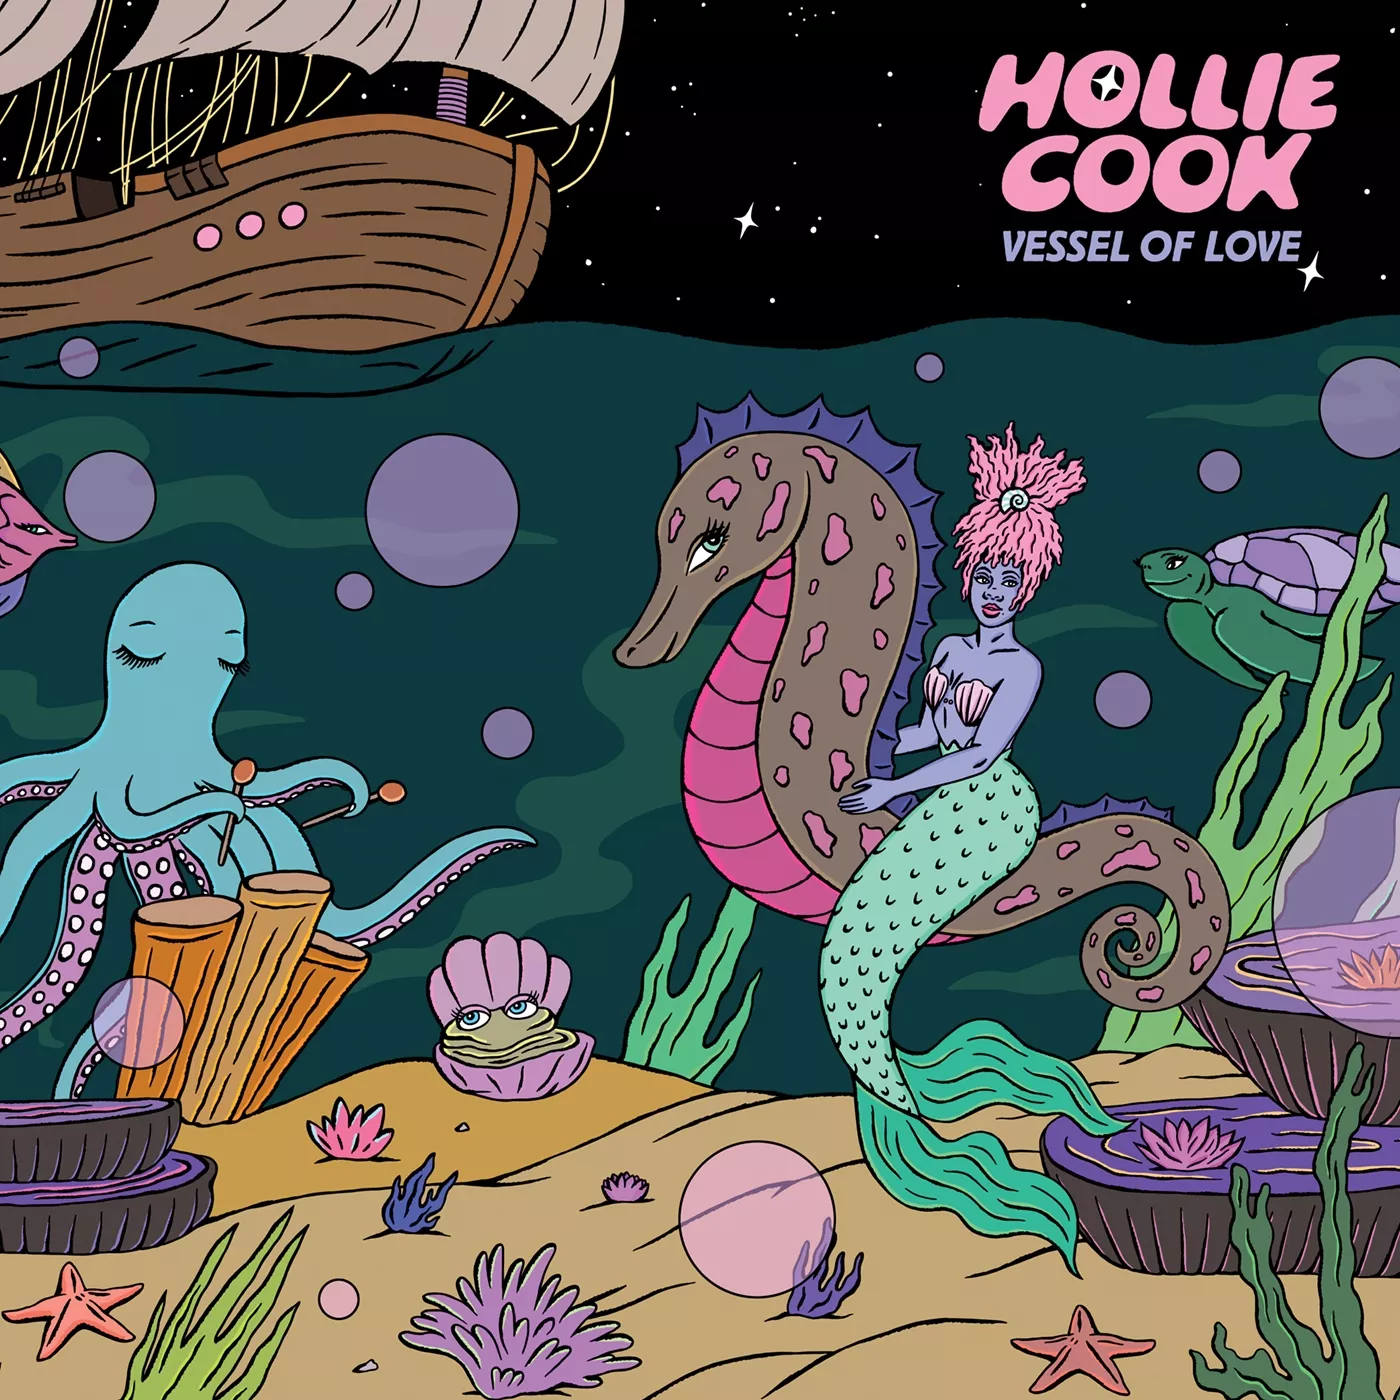 Vessel Of Love - Hollie Cook